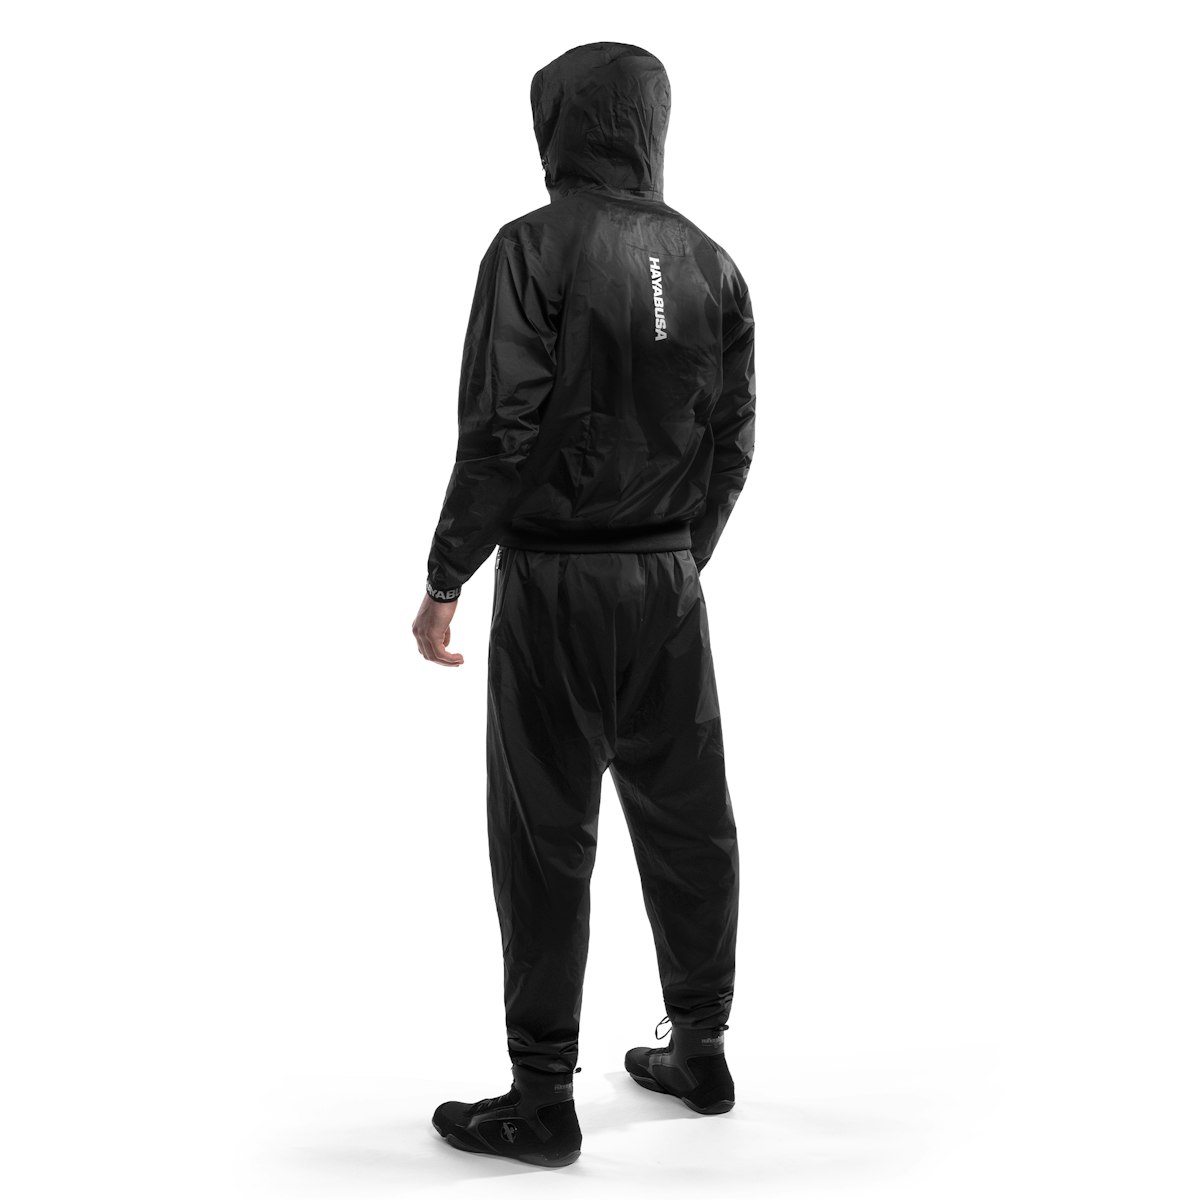 Core Unisex Sauna Suit with Zipper and Hood